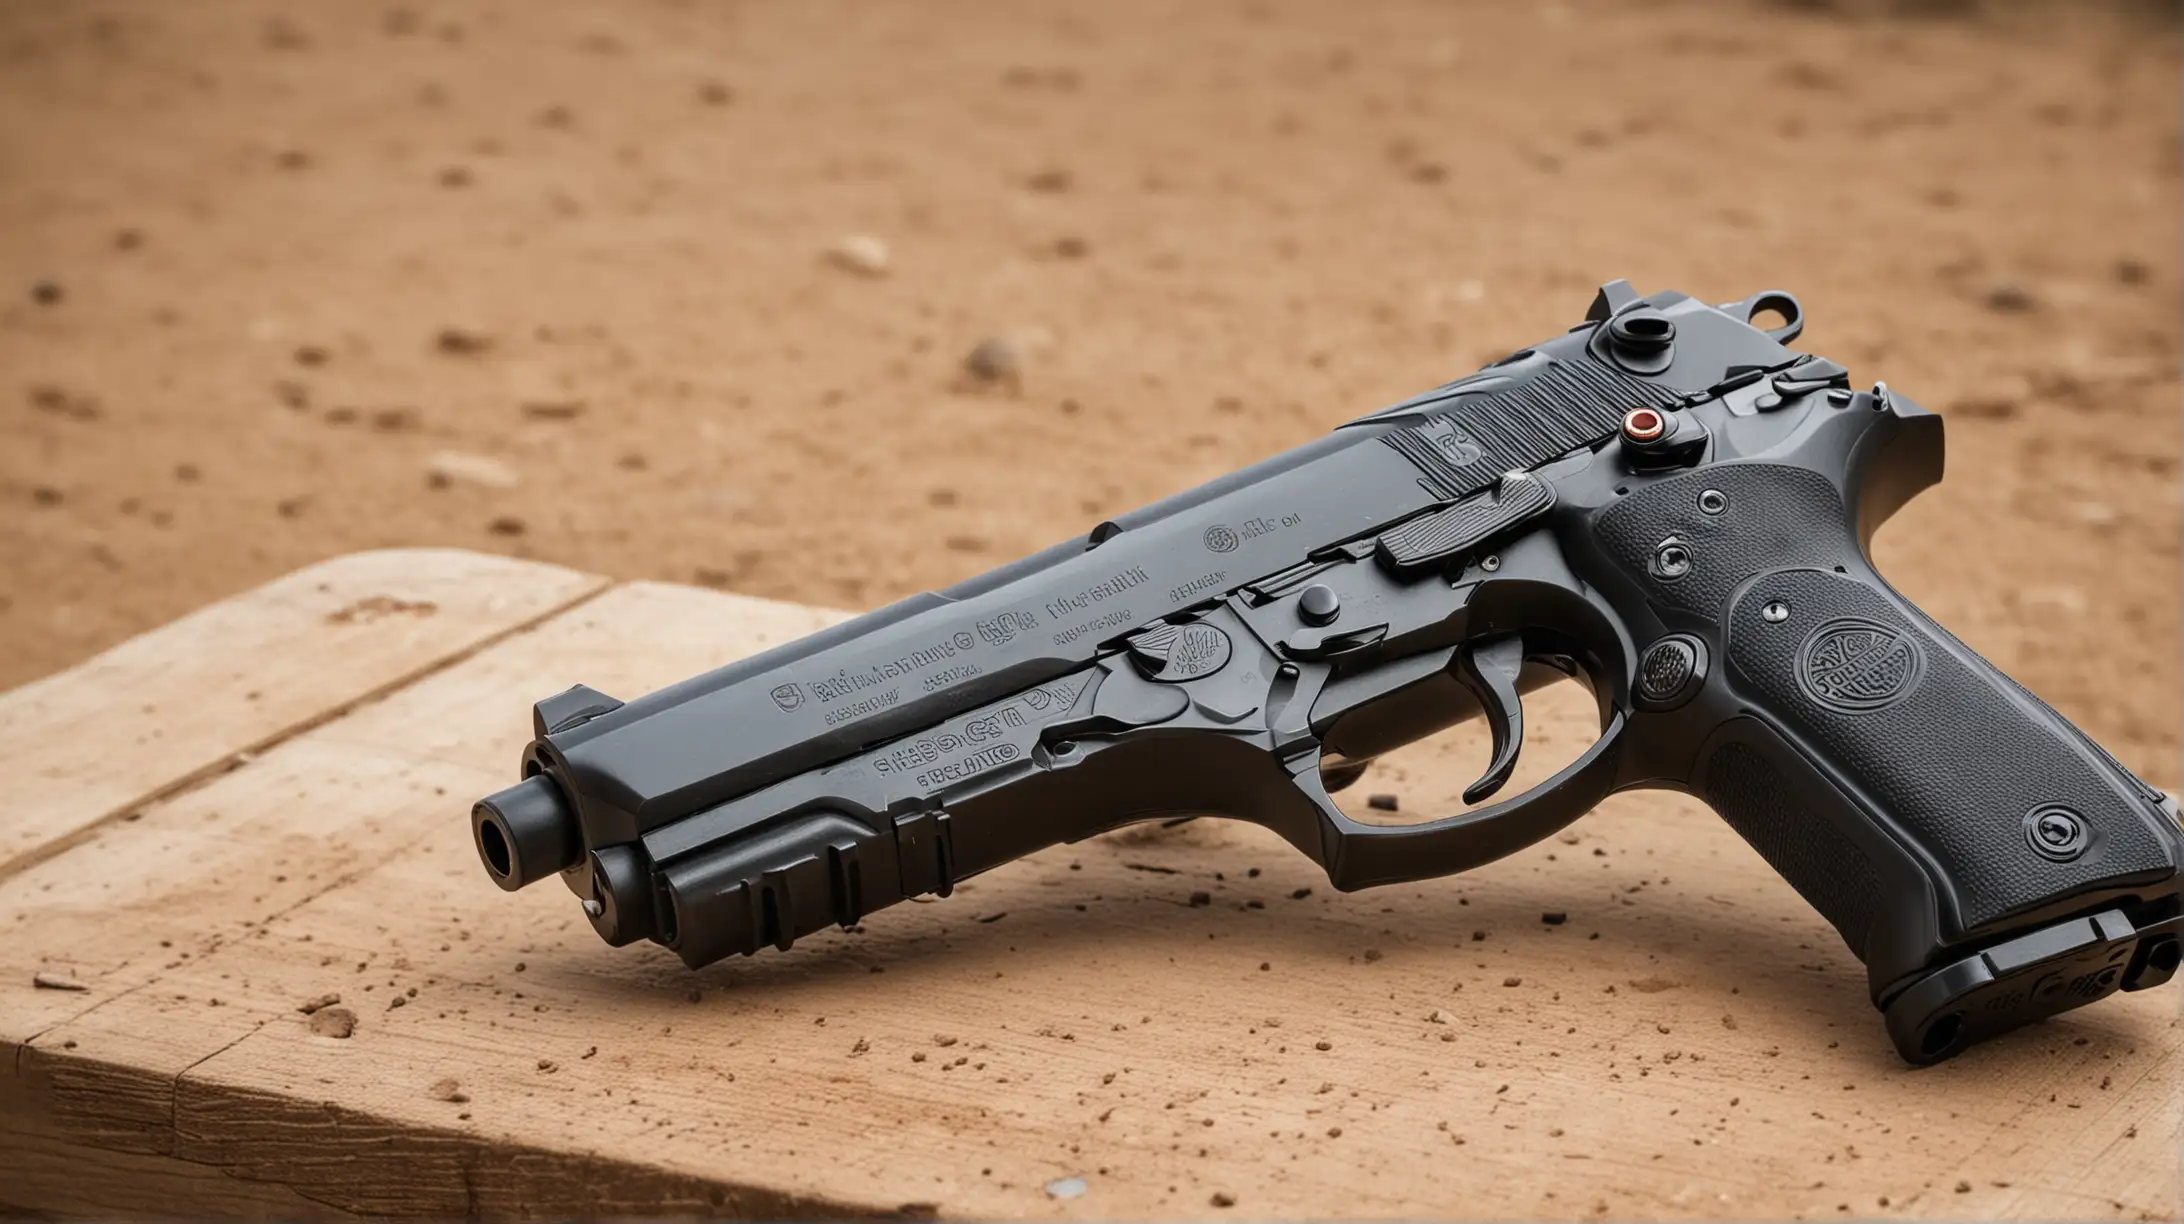 Beretta Pistol Shooting Target Practice at the Range